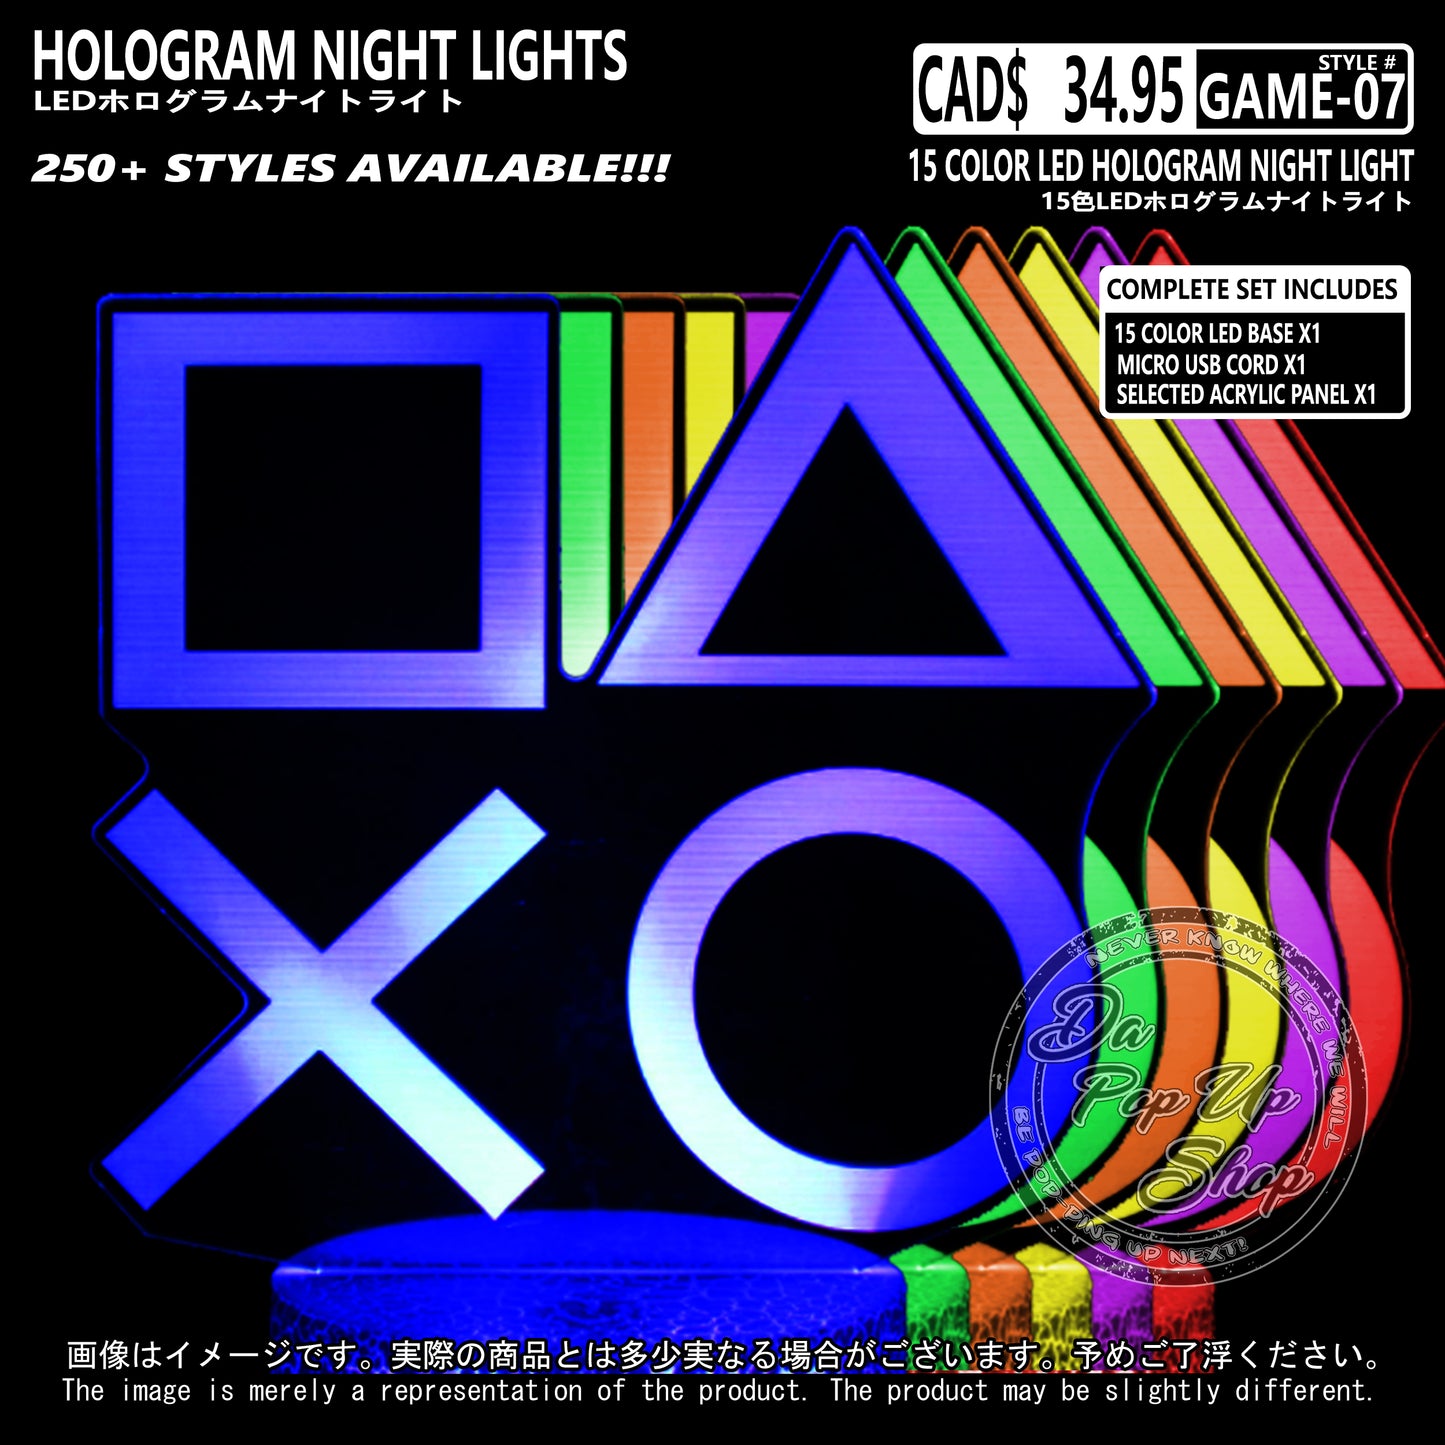 (GAME-07) Sony Playstation Hologram LED Night Light